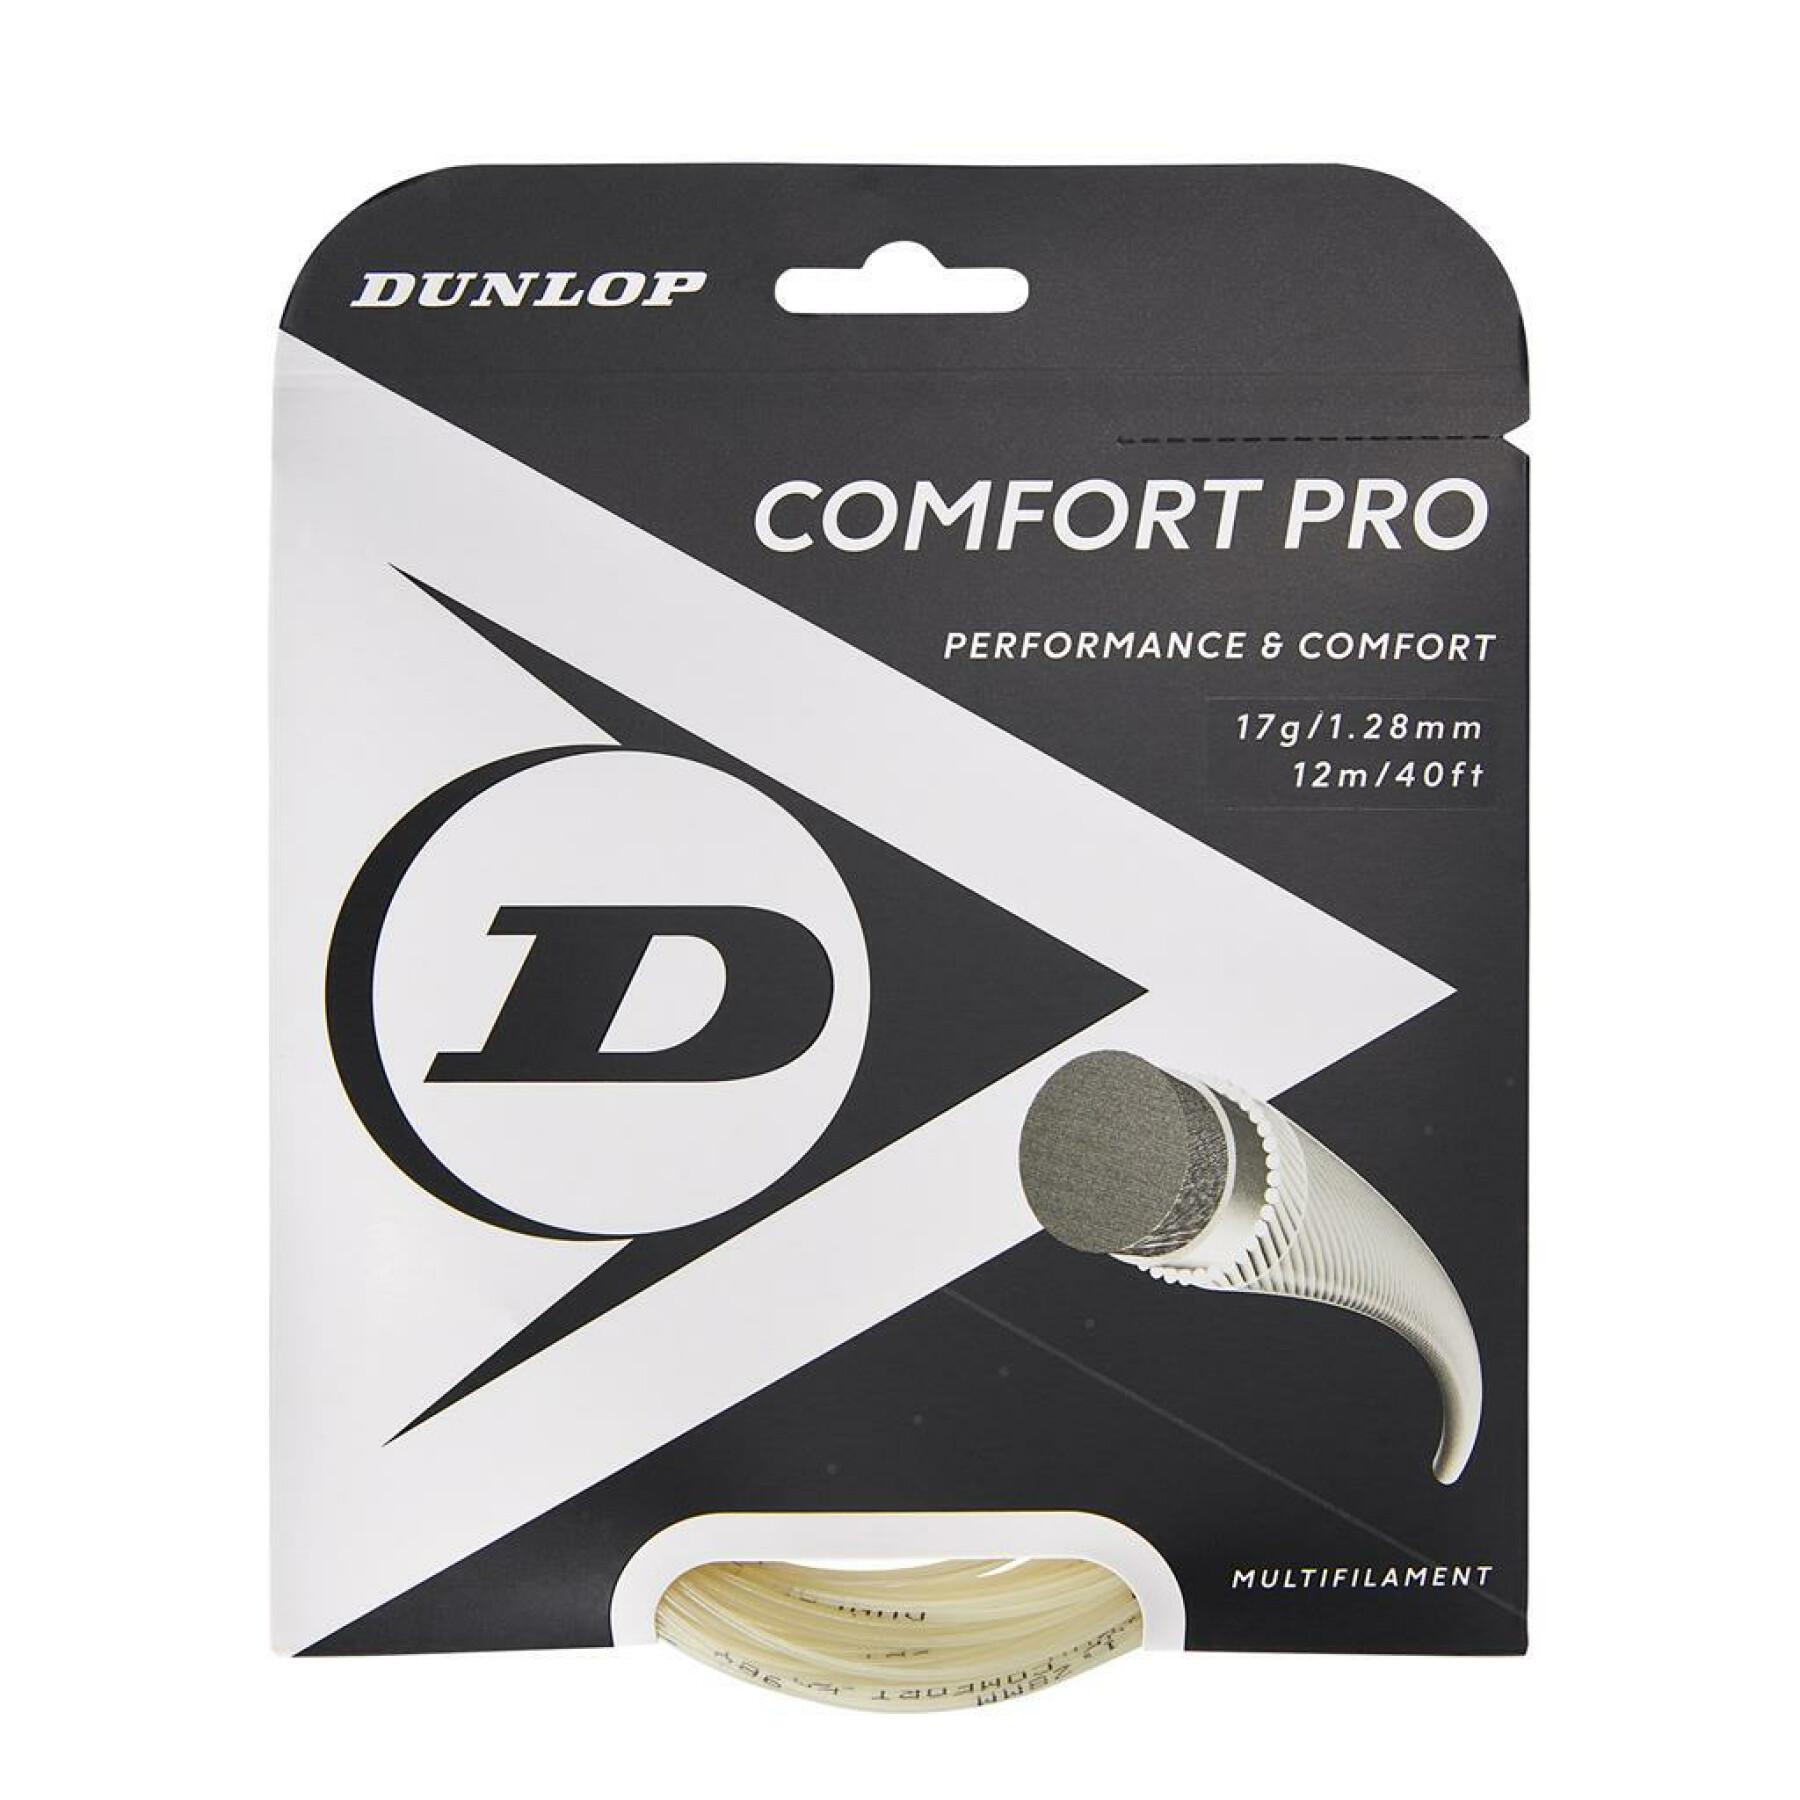 Rope Dunlop comfort pro